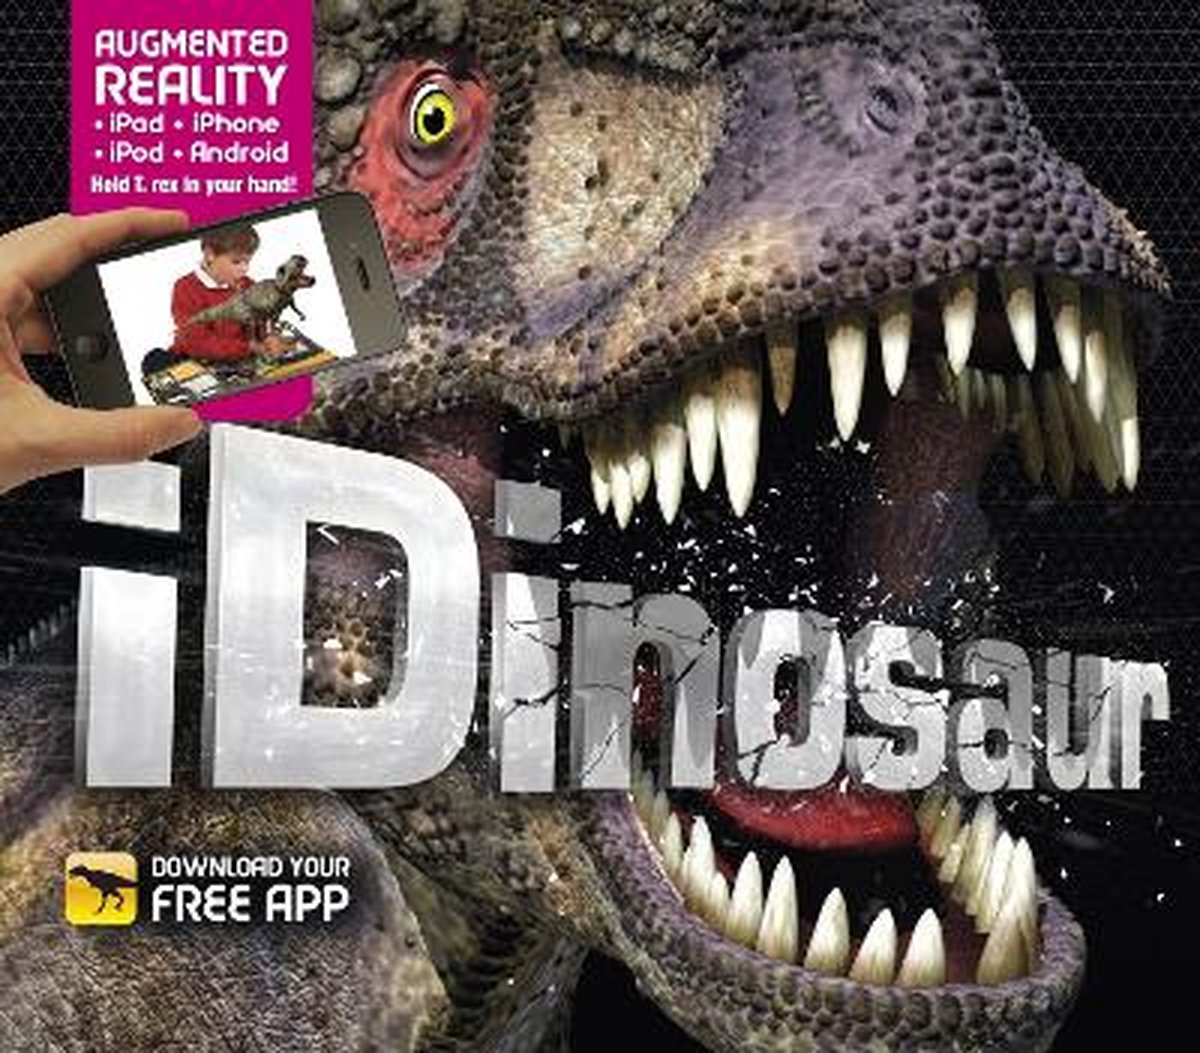 iDinosaur Augmented Reality